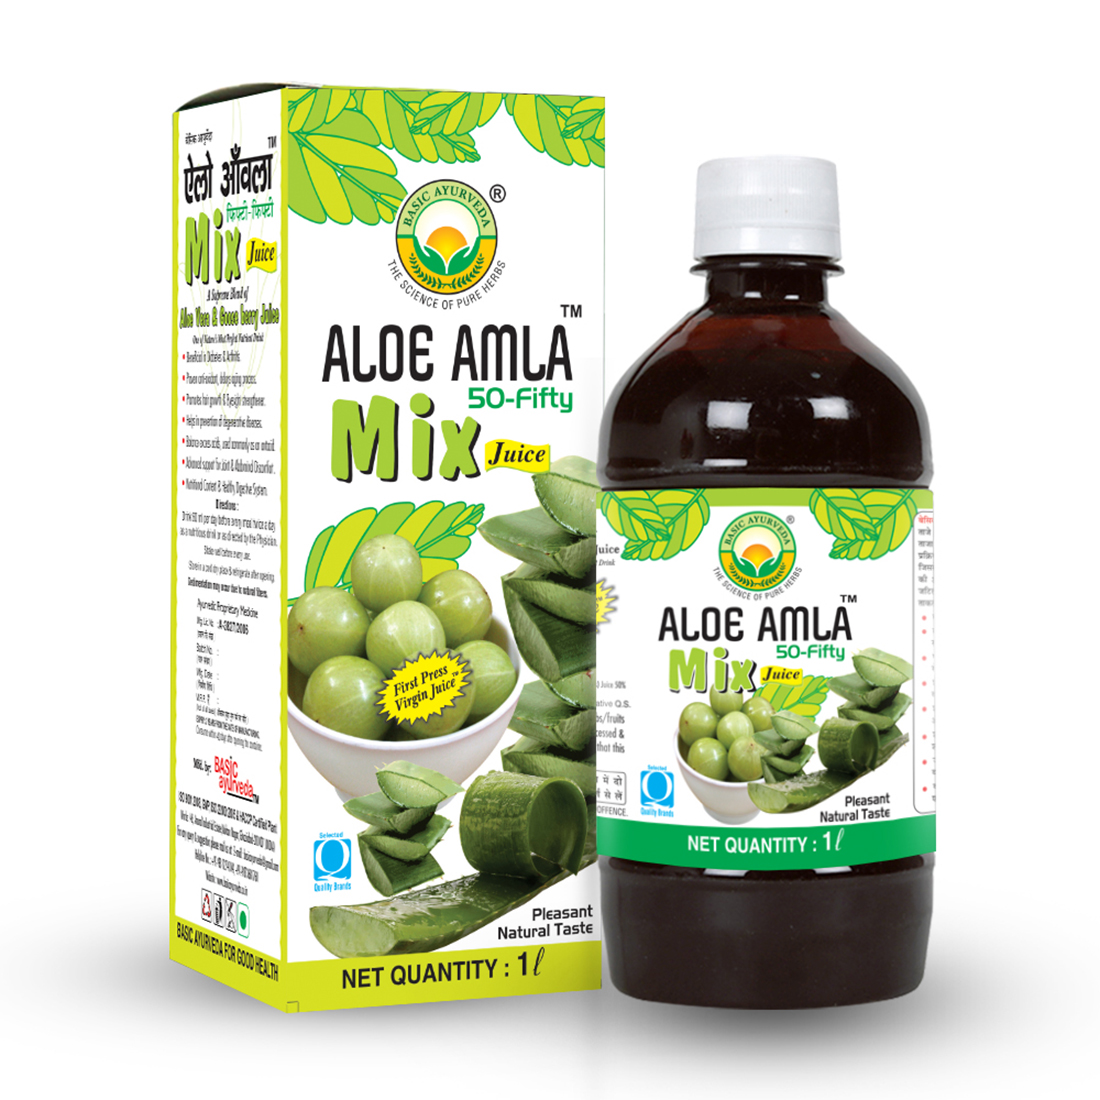 Aloe Amla 50-Fifty Mix Juice